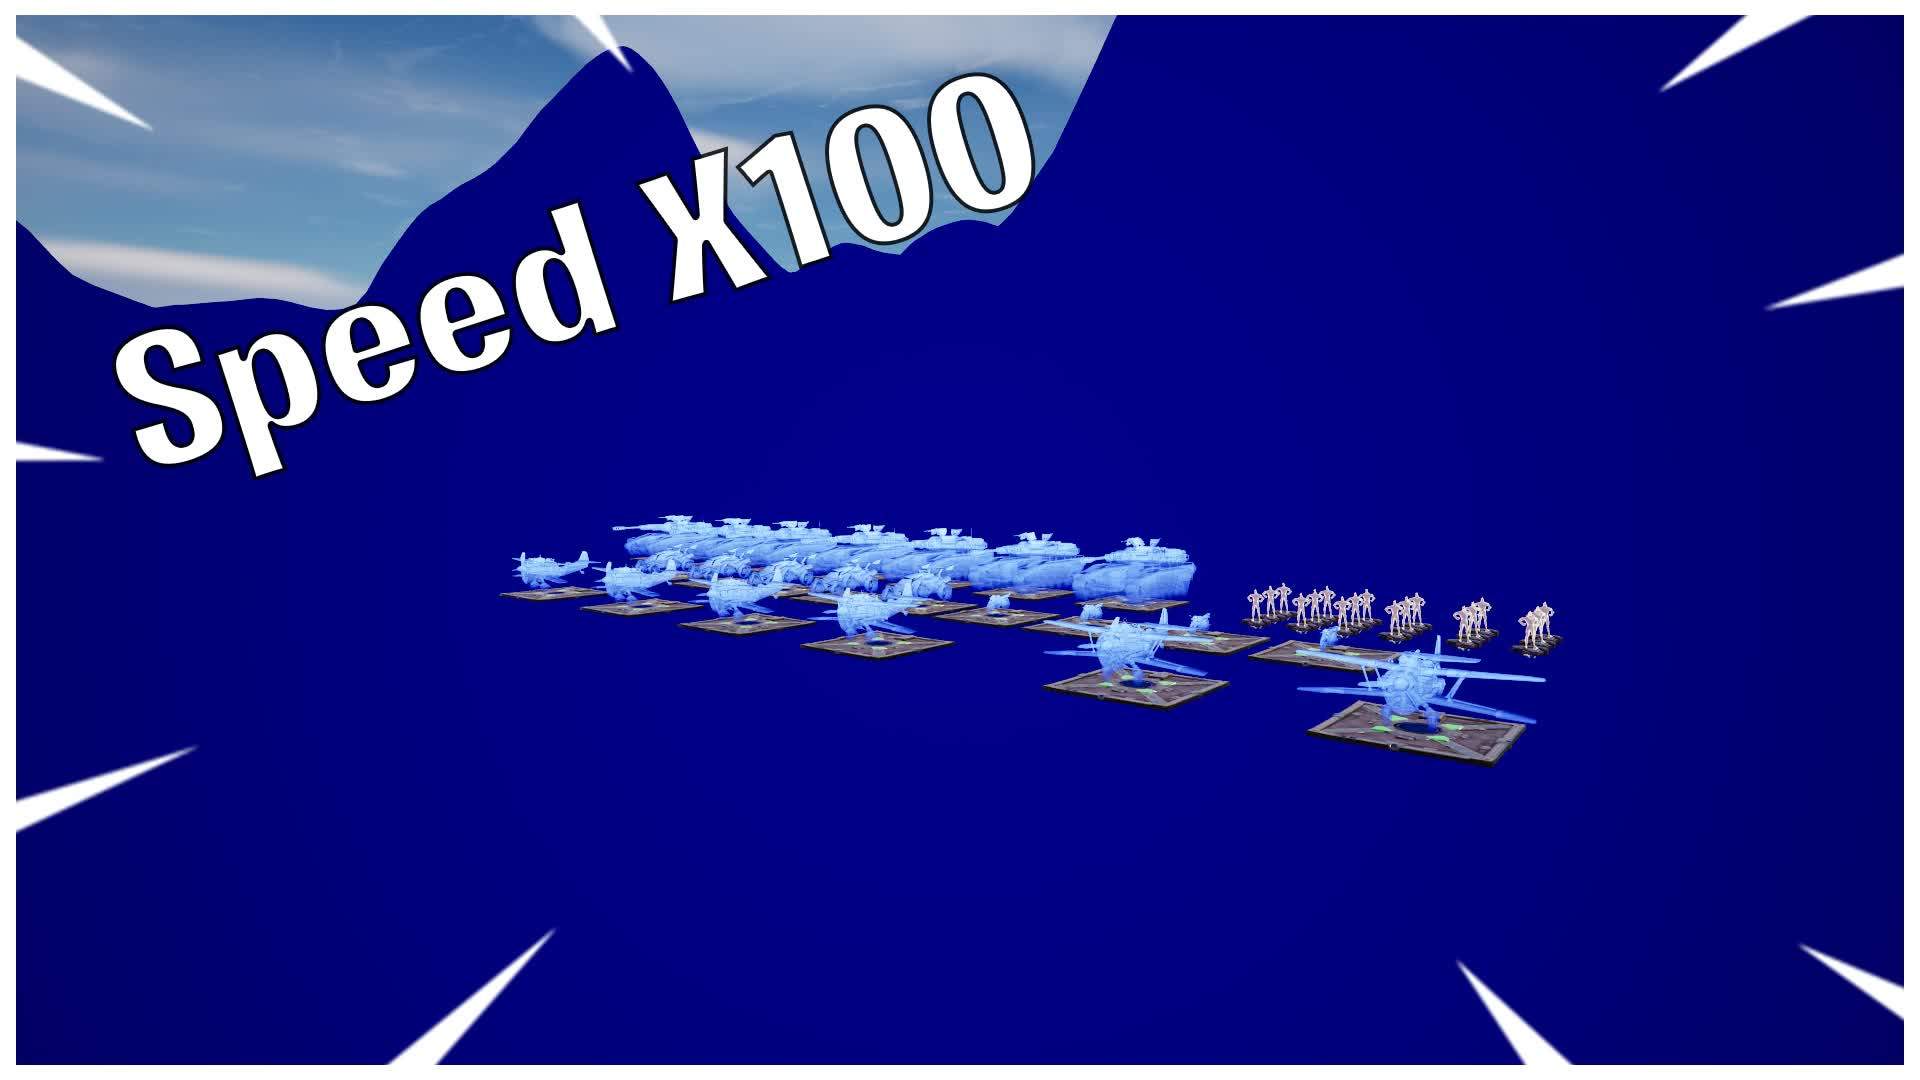 Blue Speeeed x100